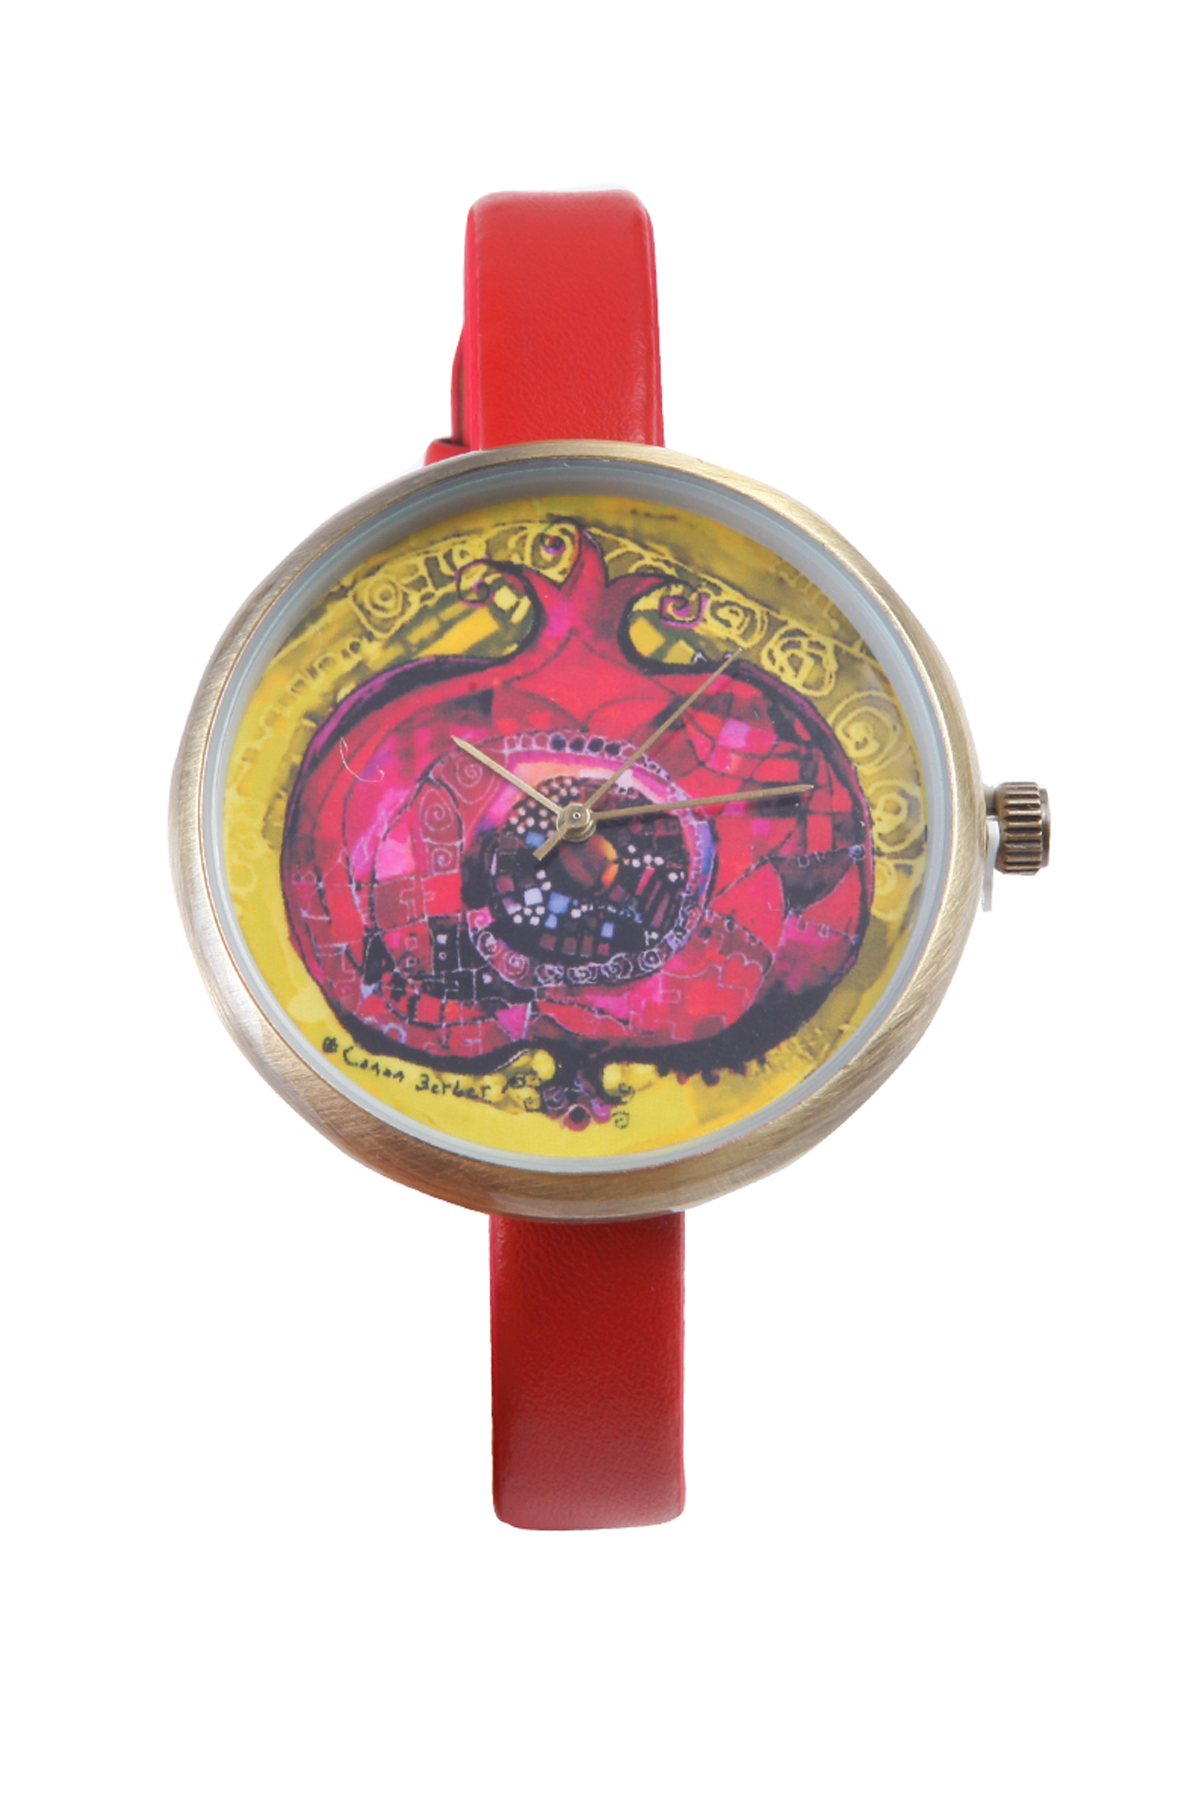 Biggdesign Pomegranate Patterned Wrist Watch, 40 mm Stainless Steel Case Diameter, Women Watch, Red Wrist Watch, Custom Design